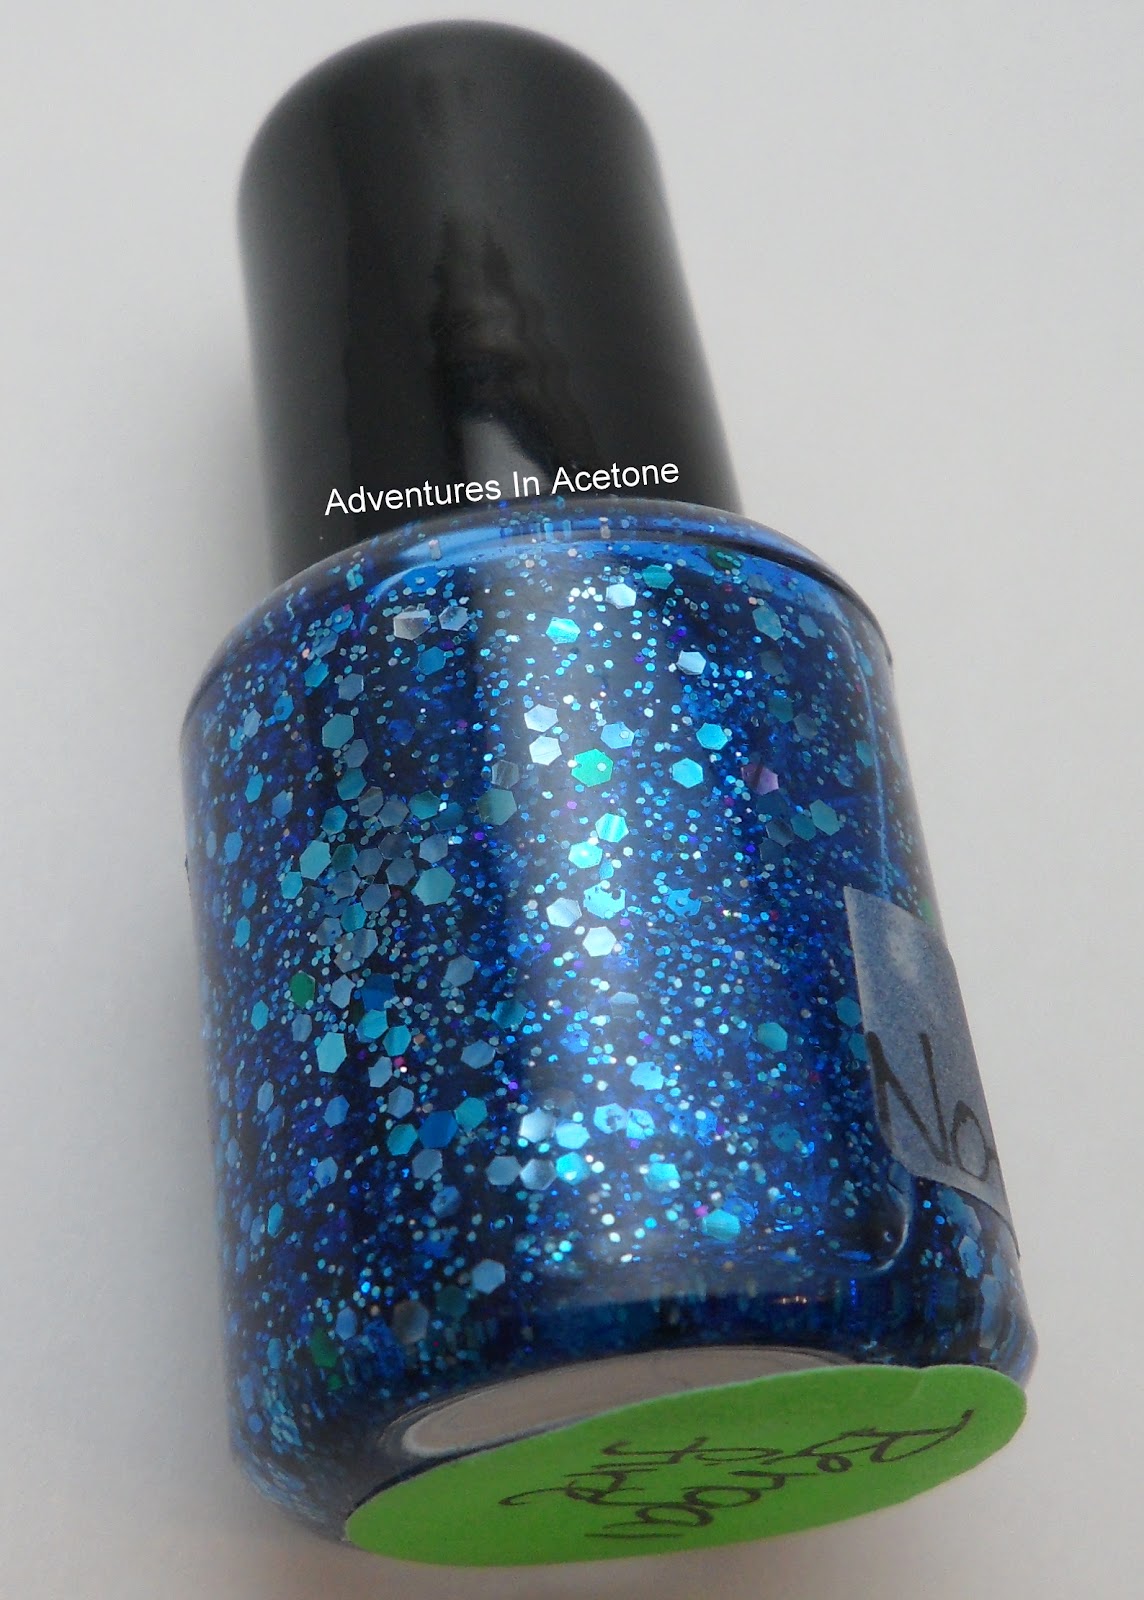 The Prettiest Blue Glitter! - Adventures In Acetone